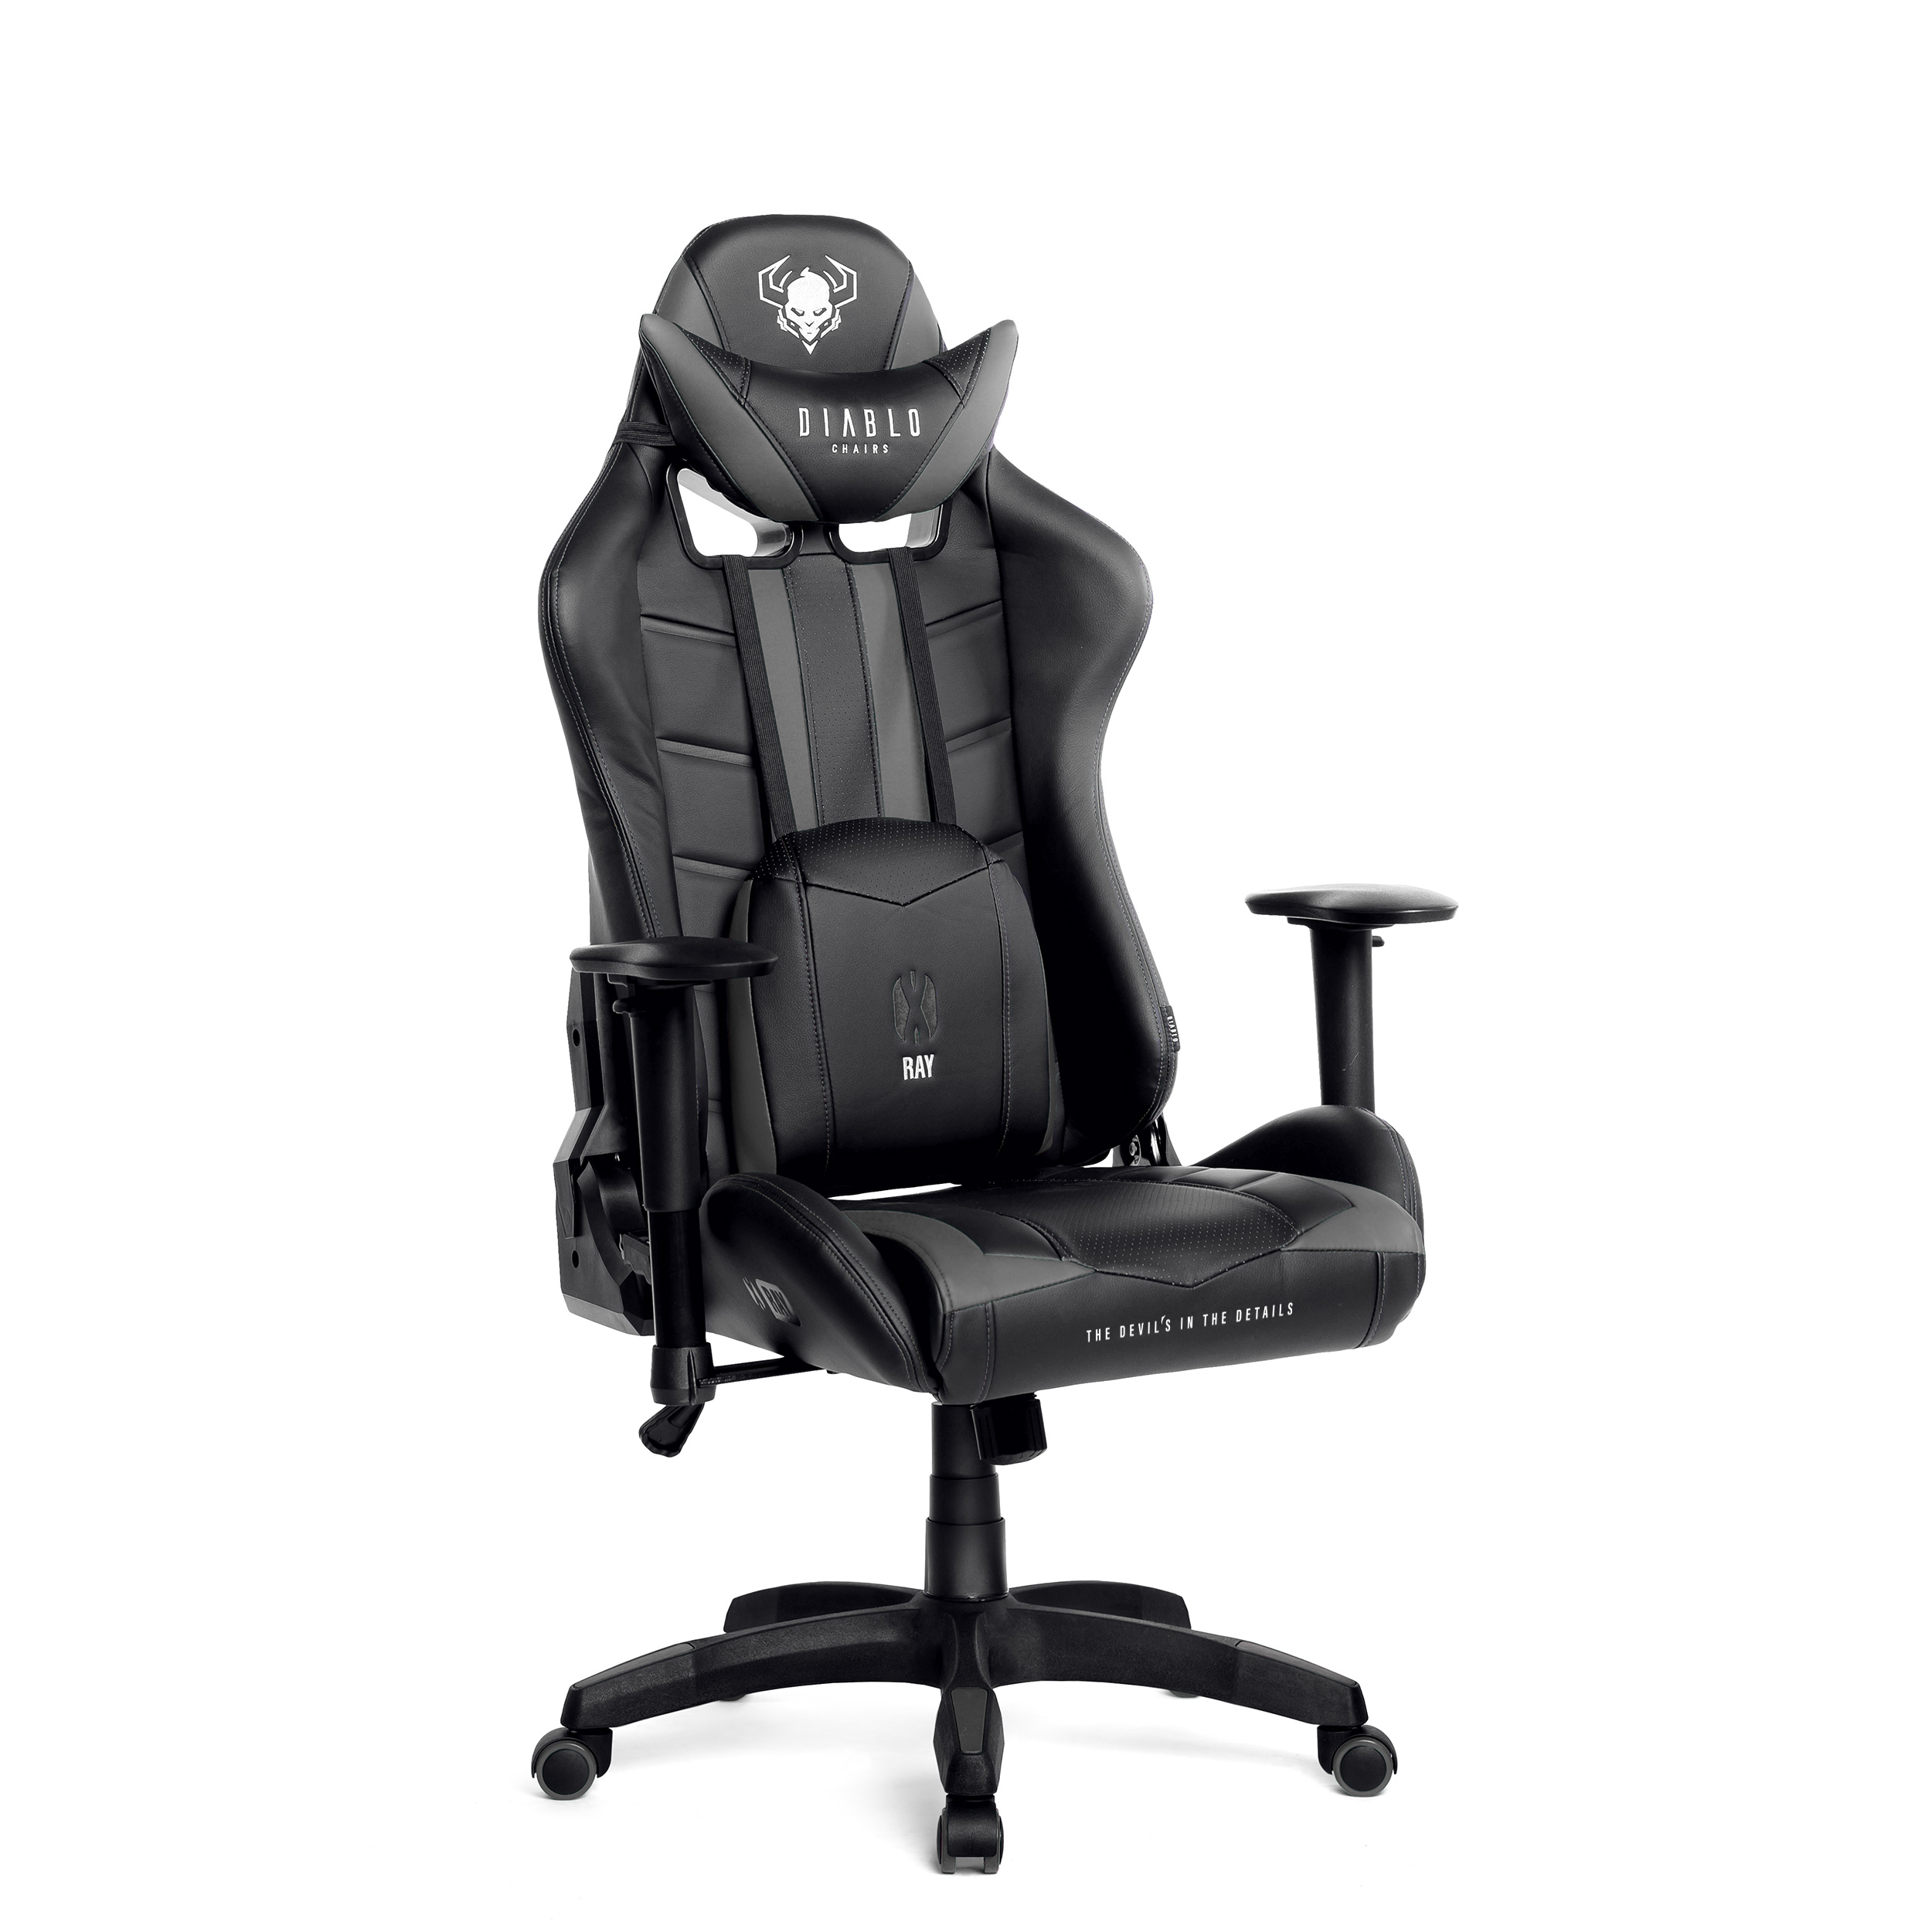 CHAIRS DIABLO black/grey Chair, NORMAL X-RAY GAMING Gaming STUHL